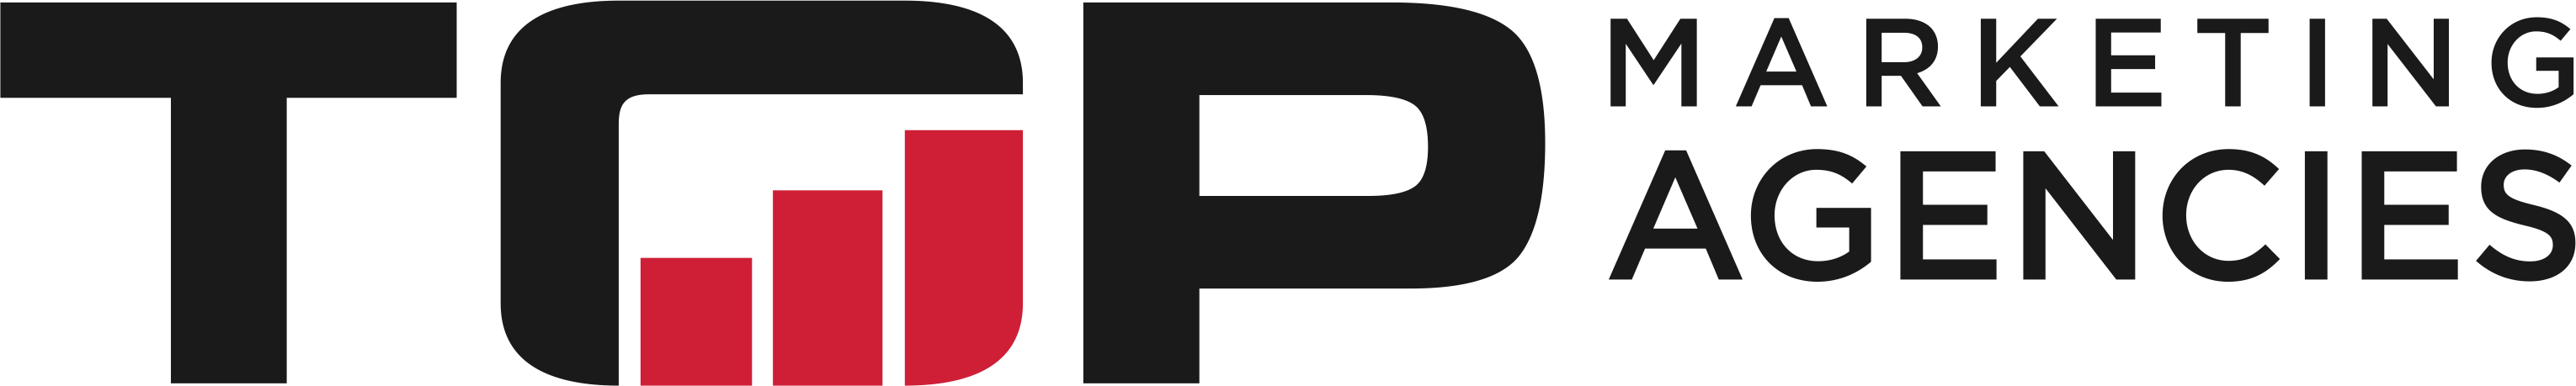 Top-Marketing-Agencies-Logo-PNG